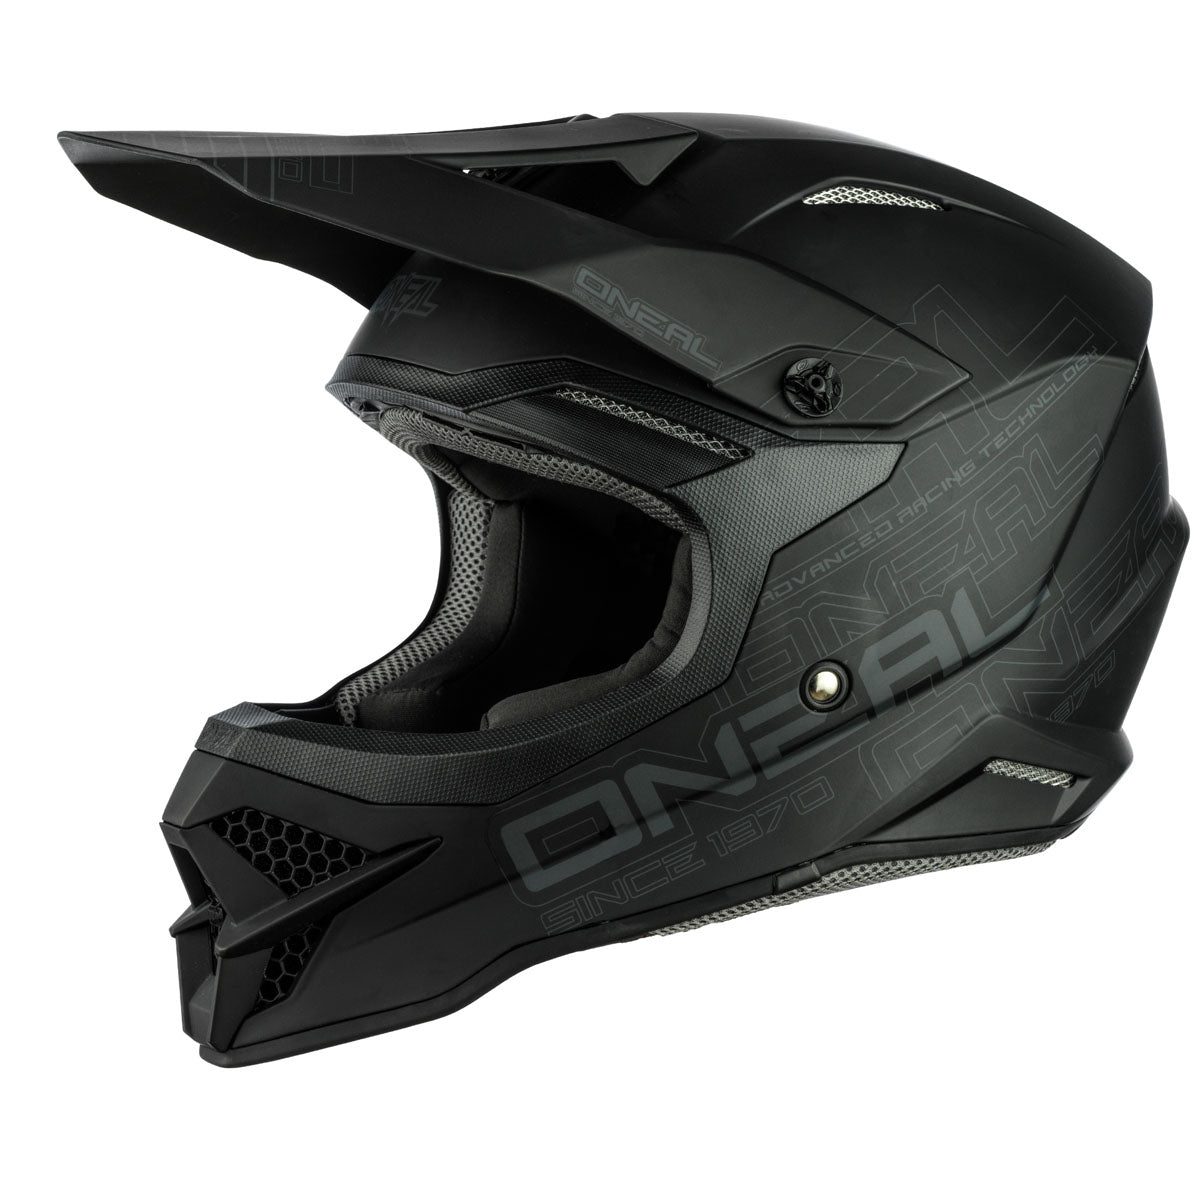 O'Neal 3 Series Flat 2.0 Helmet - ExtremeSupply.com